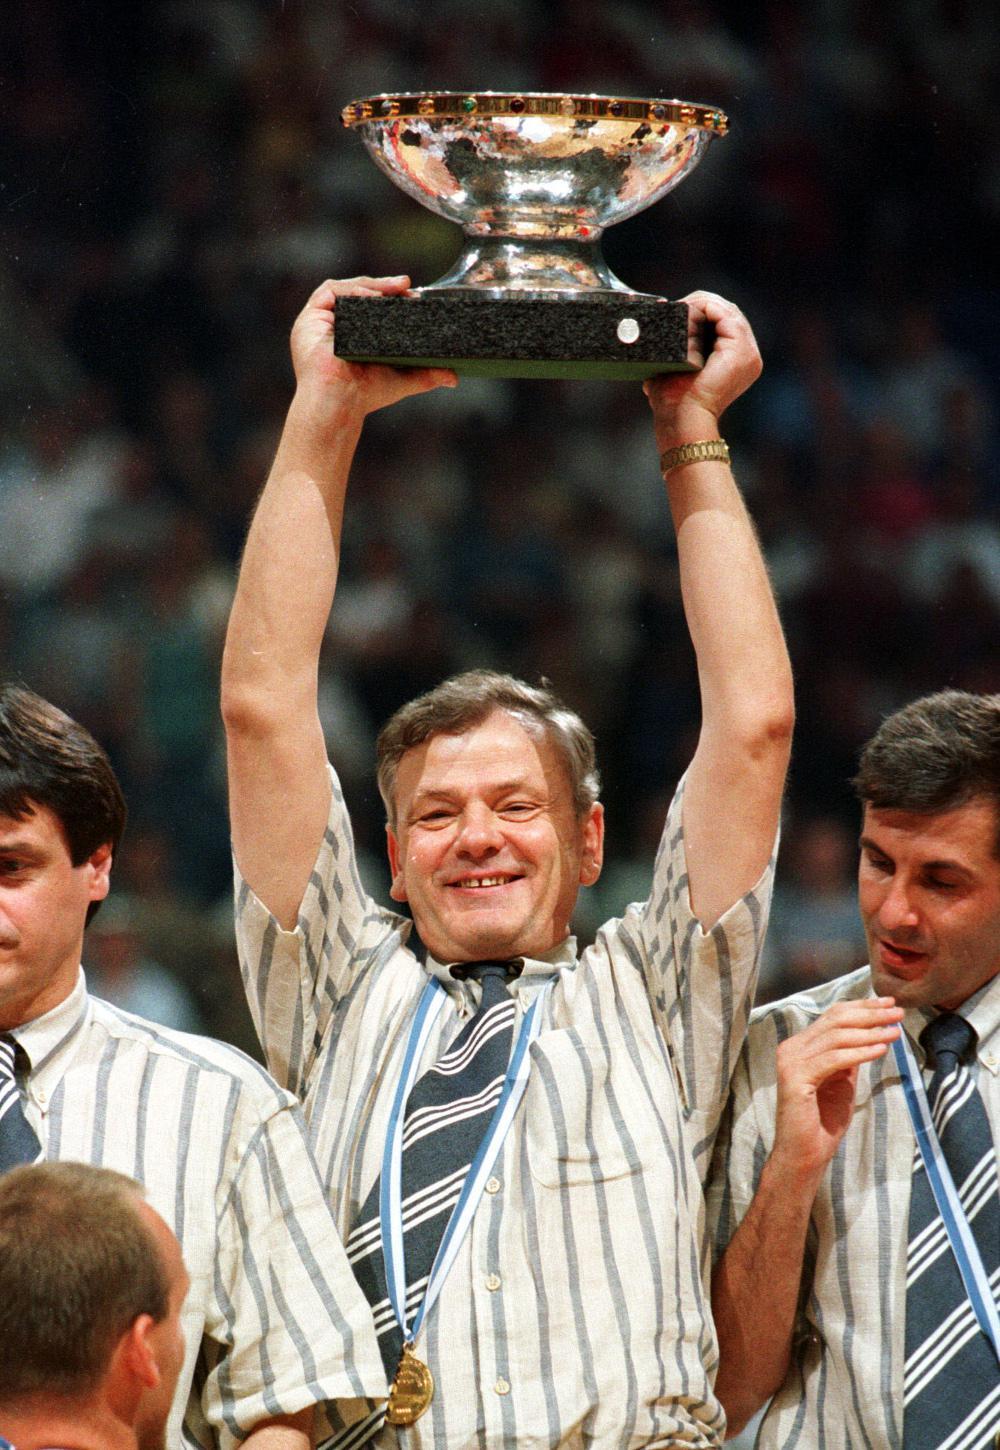 Legendary Serbian Basketball Coach Duda Ivkovic Dies At 77